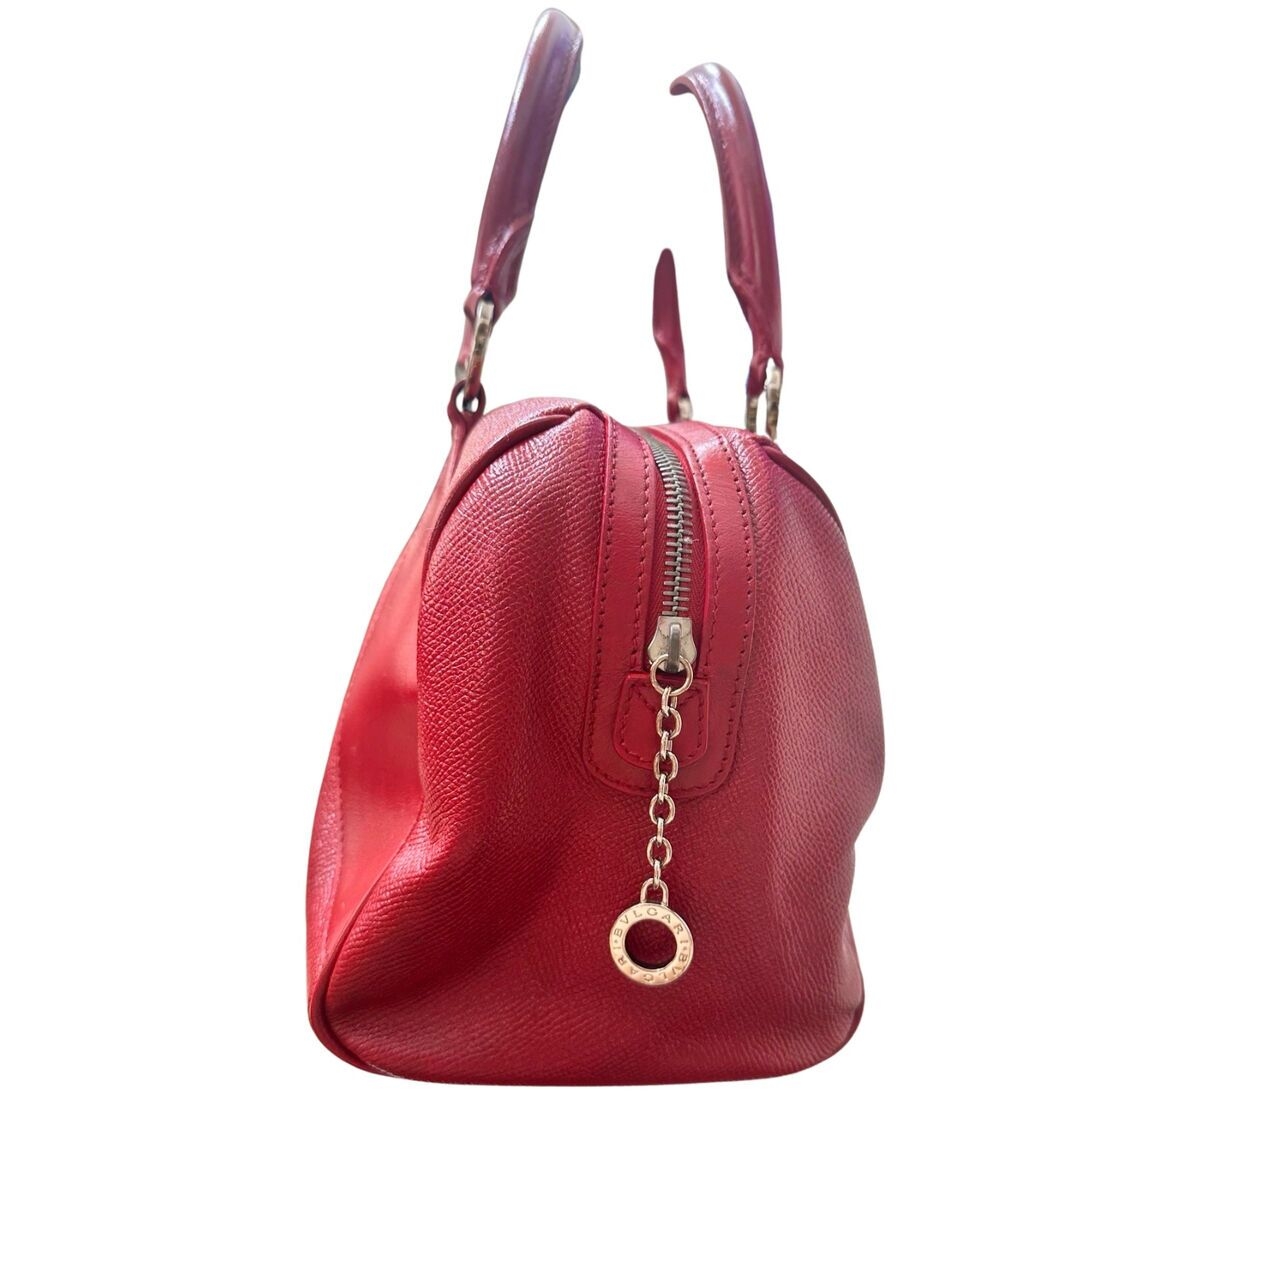 Bvlgari Red Leather Boston Handbag